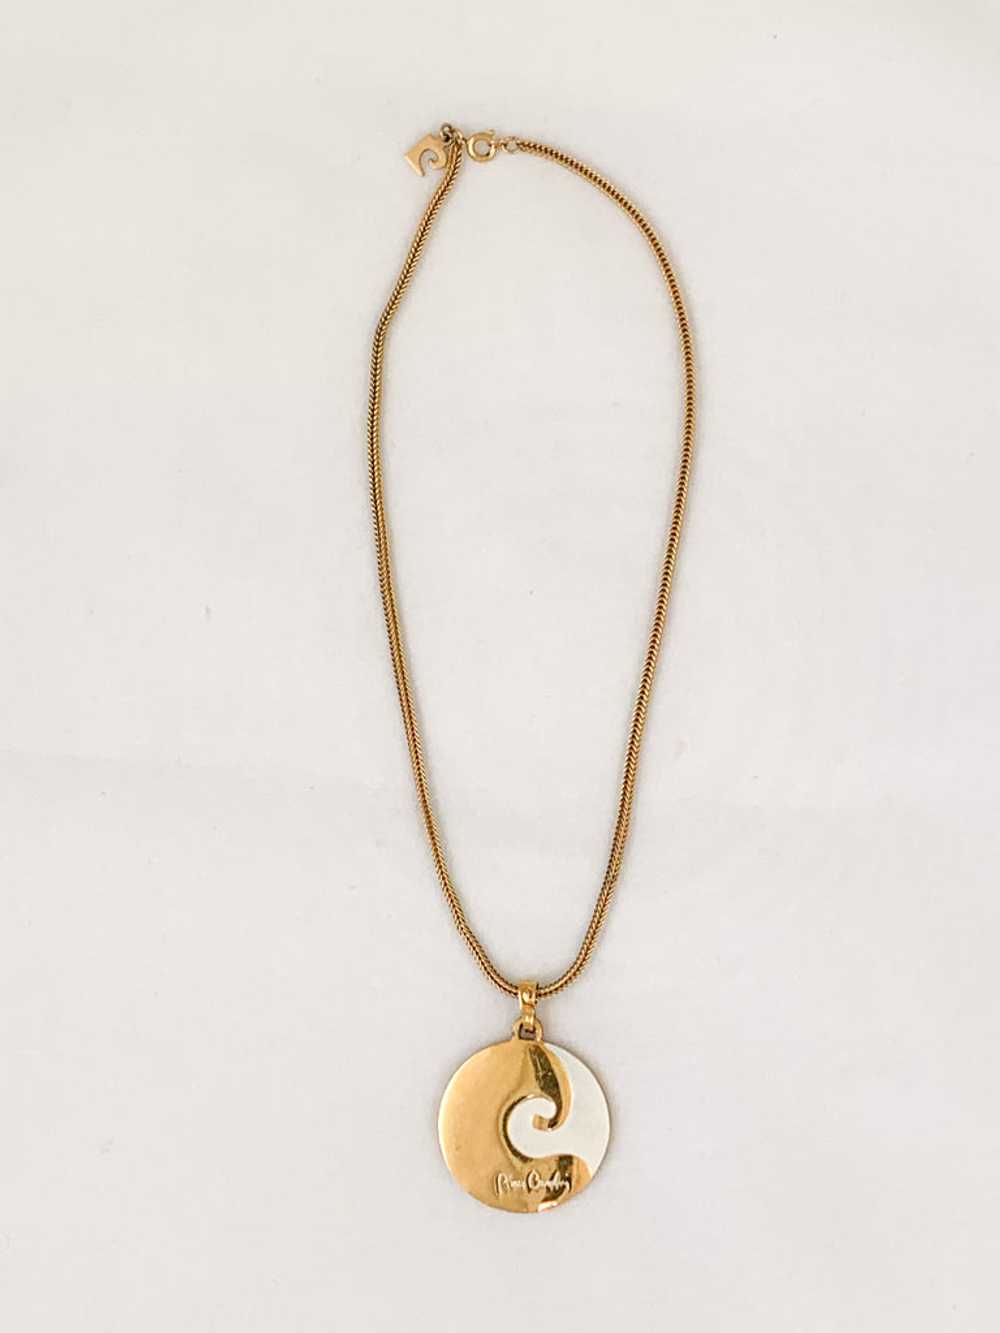 Pierre Cardin Gold Swirl Necklace - image 4